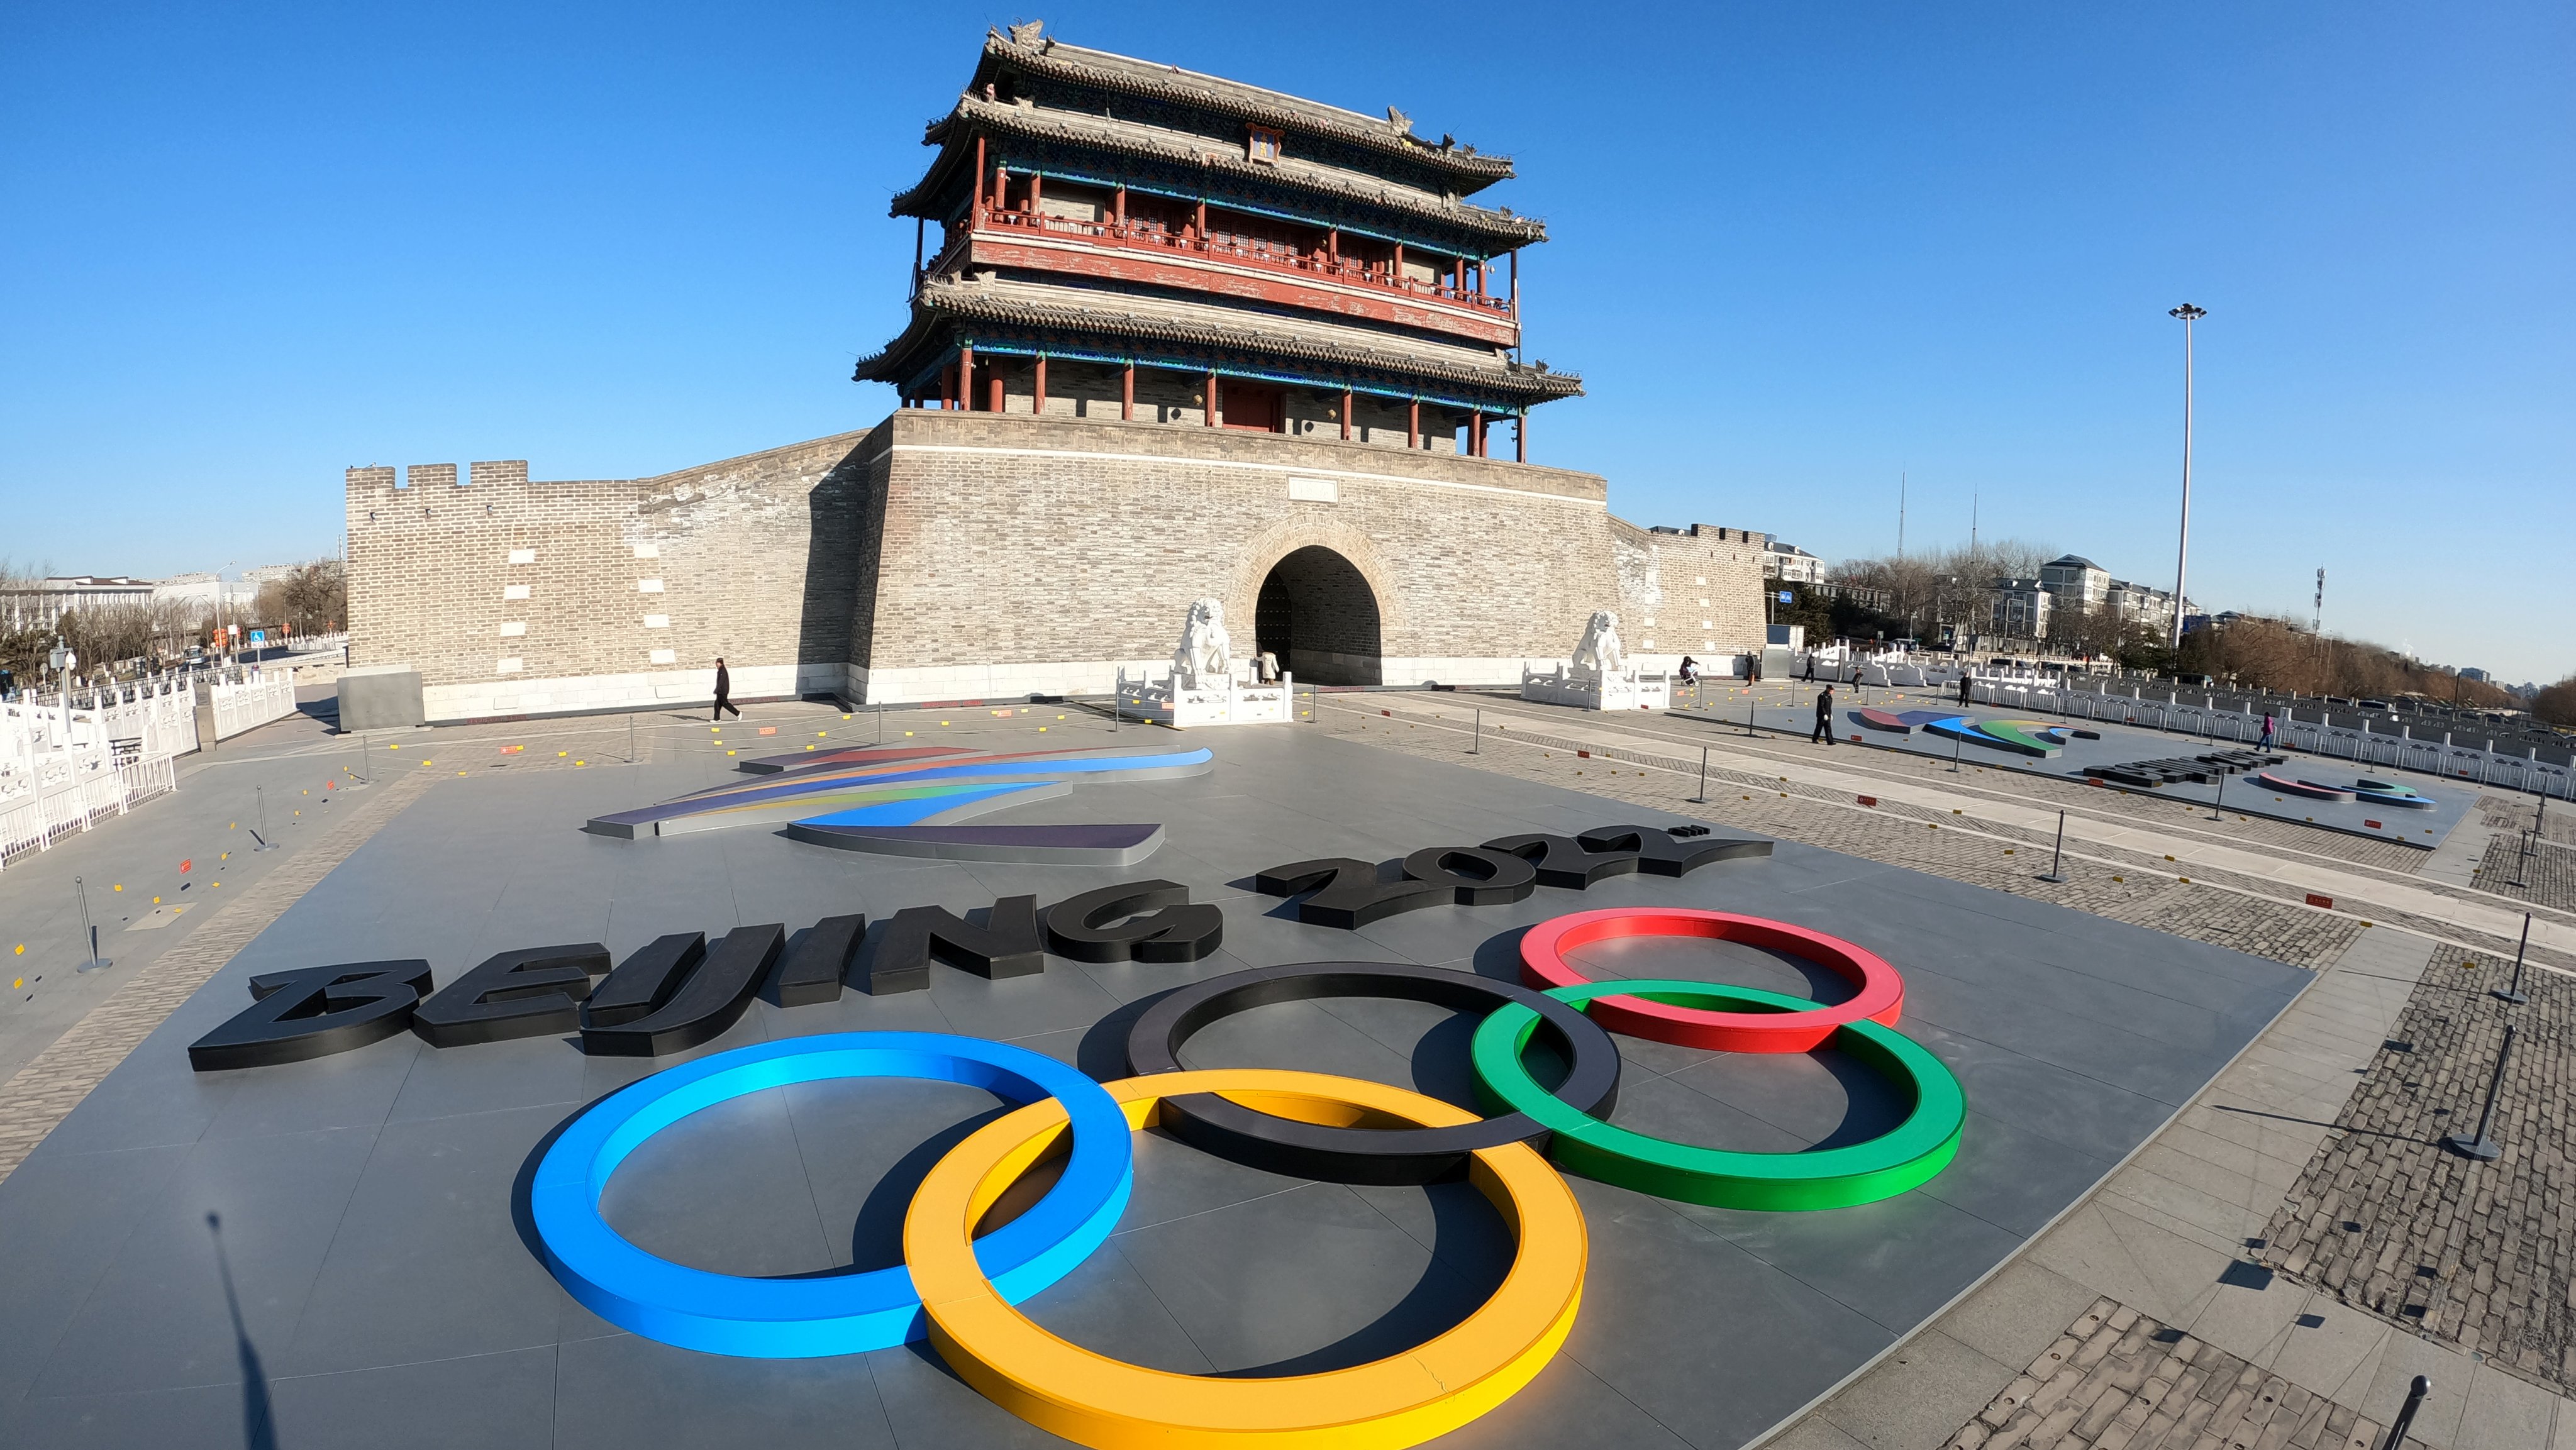 Beijing 2022 Emblems Show Up At Landmark Yongdingmen